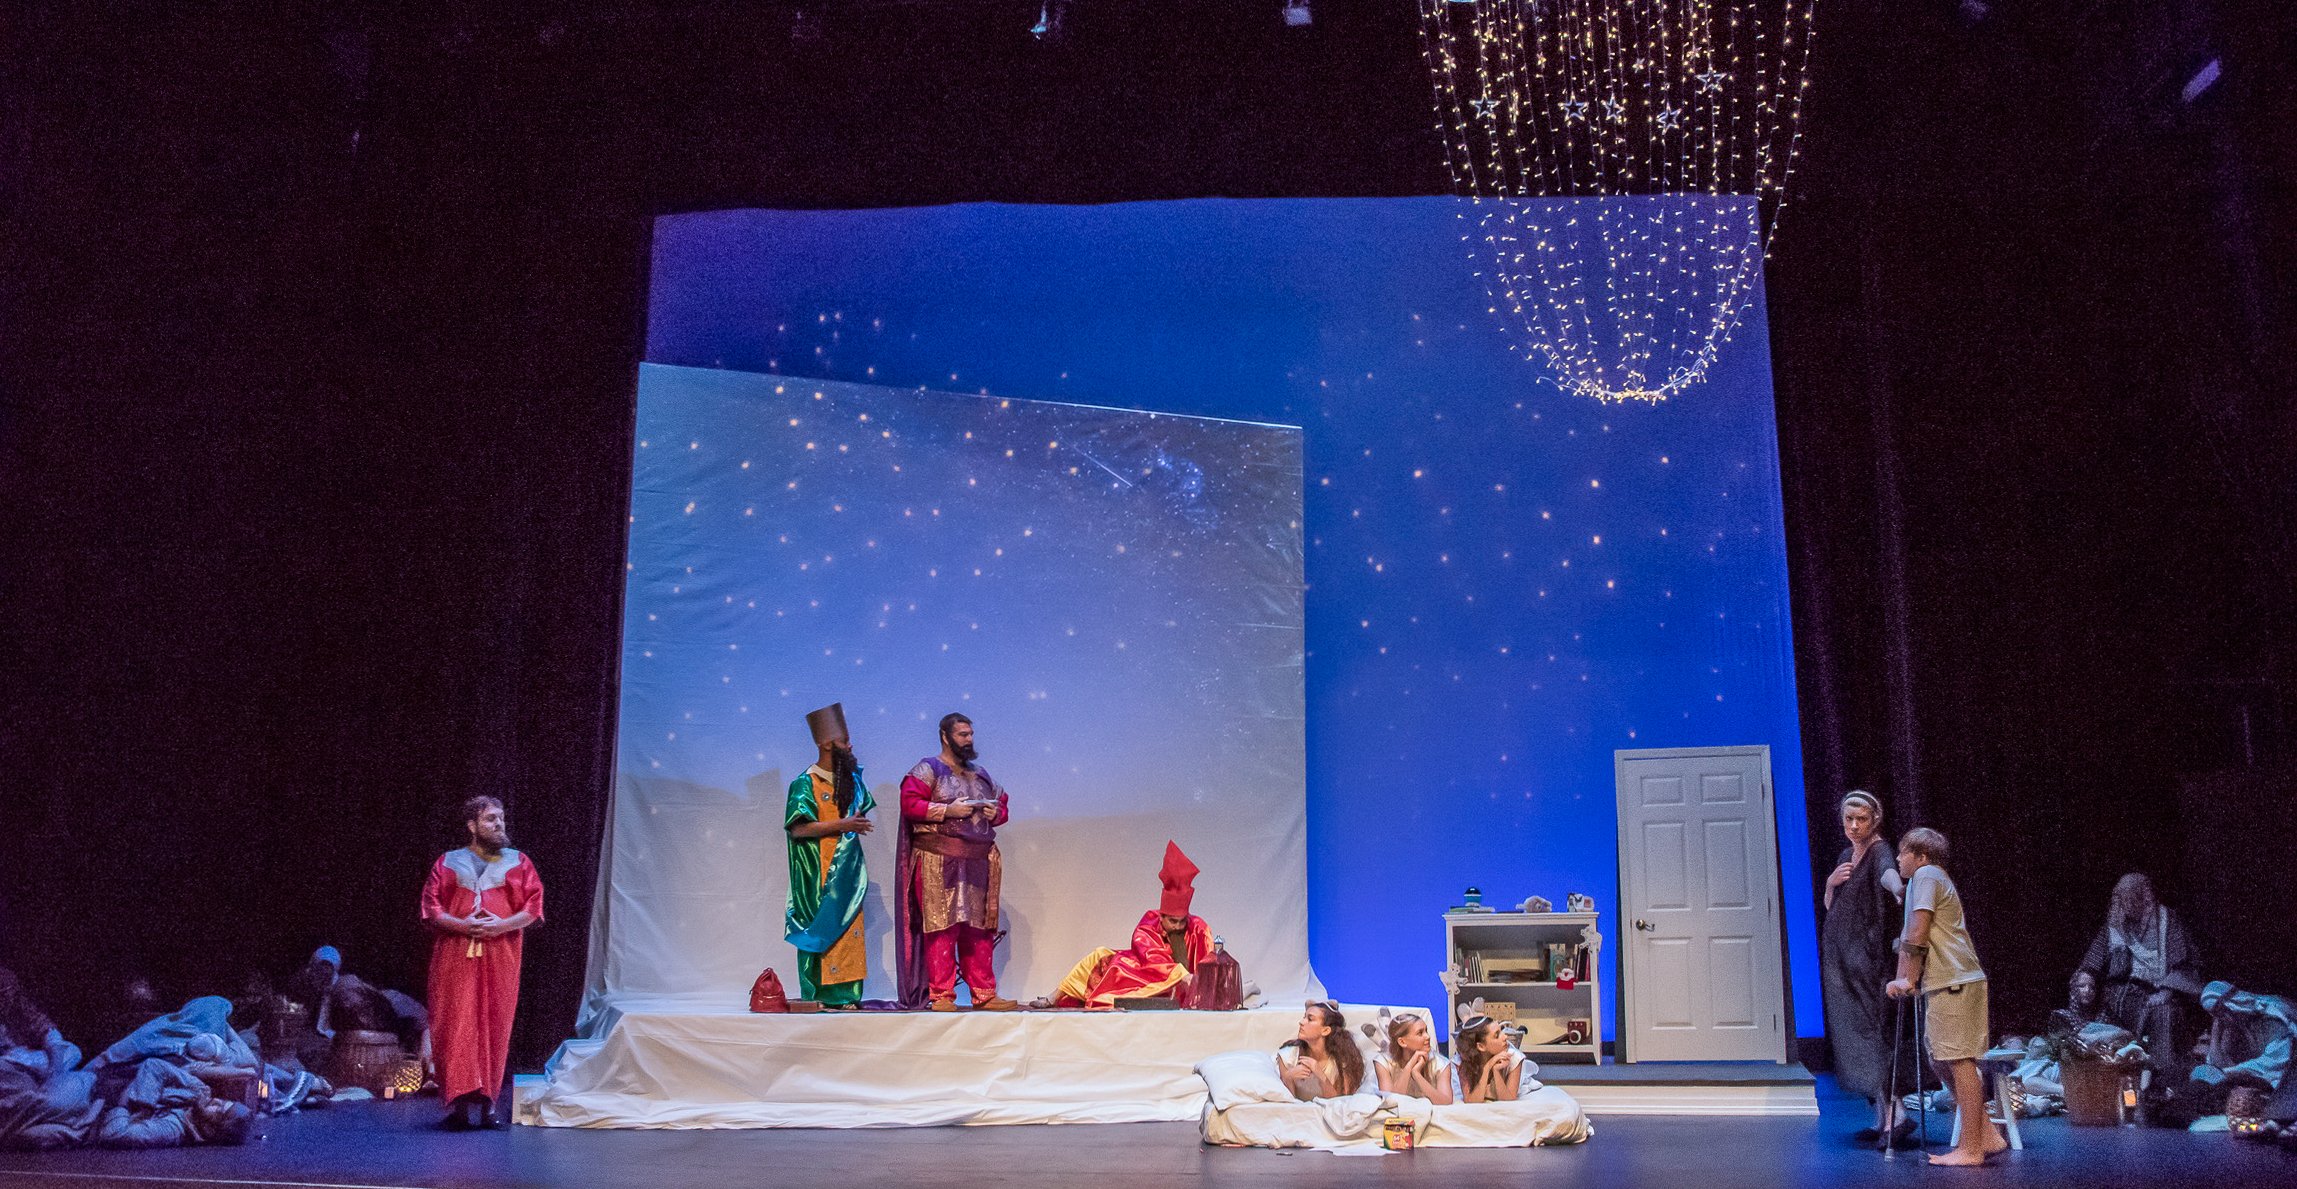 Opera Orlando's new 2017 production of Menotti's Amahl and the Night Visitors